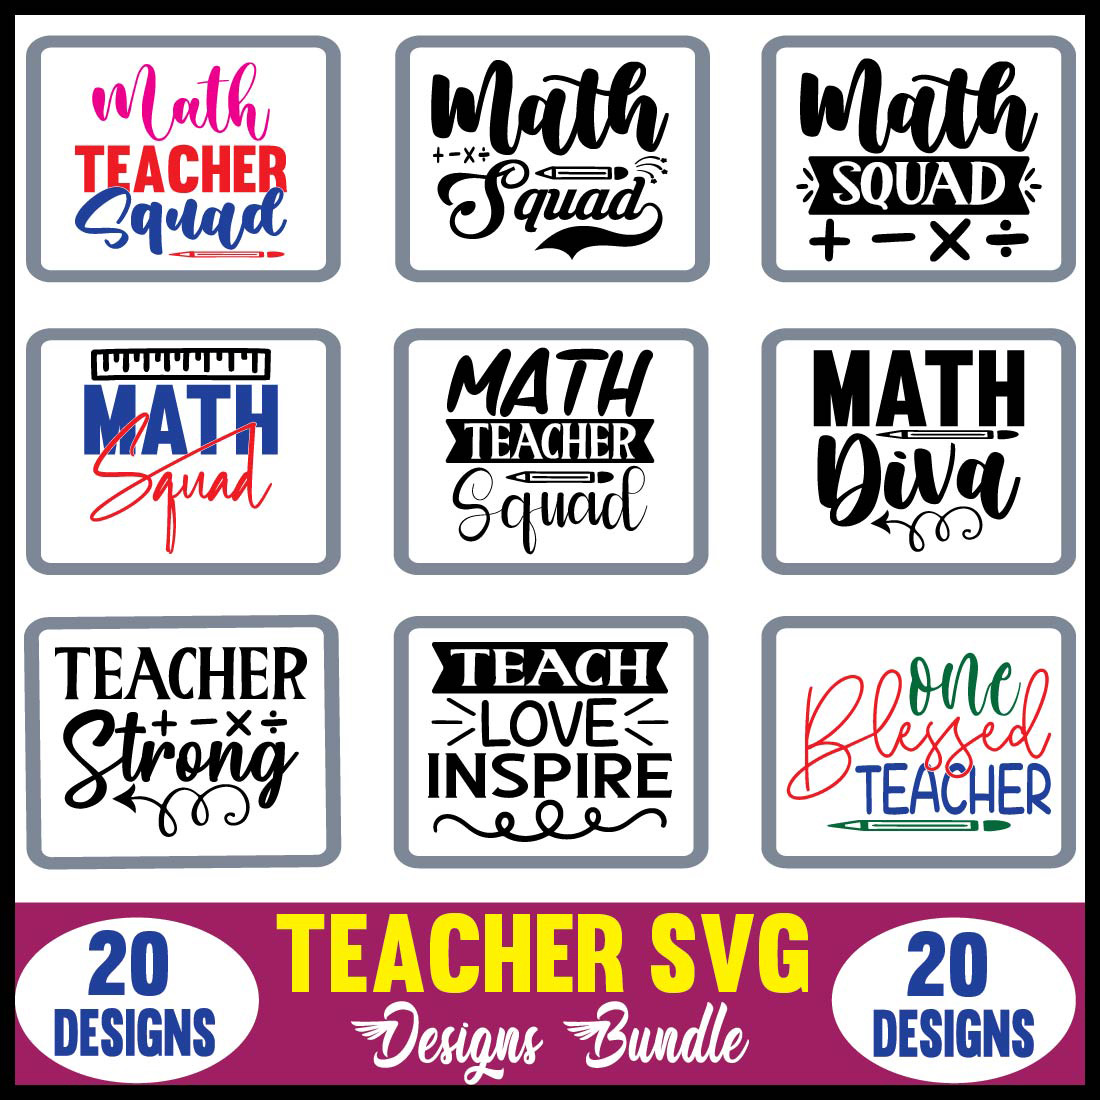 Teacher SVG Designs Bundle cover image.